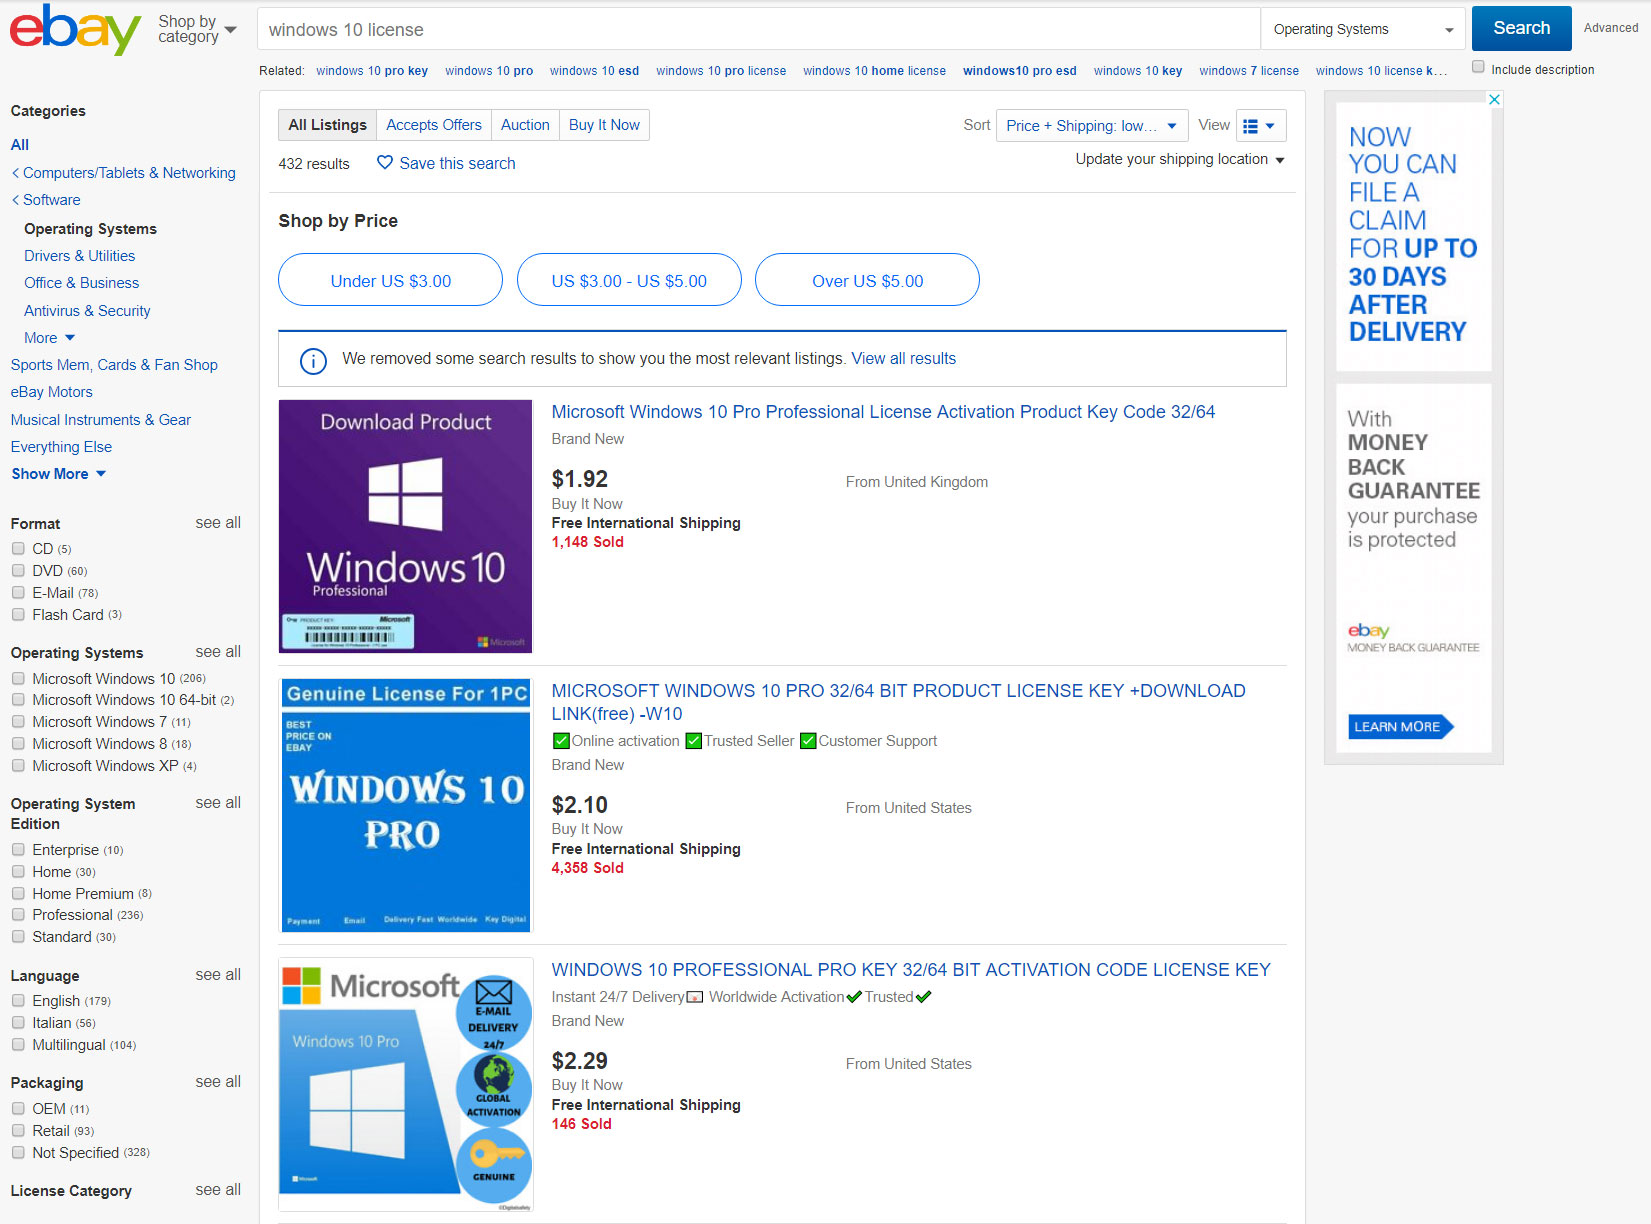 Do Cheap Windows 10 License Keys From Ebay Work